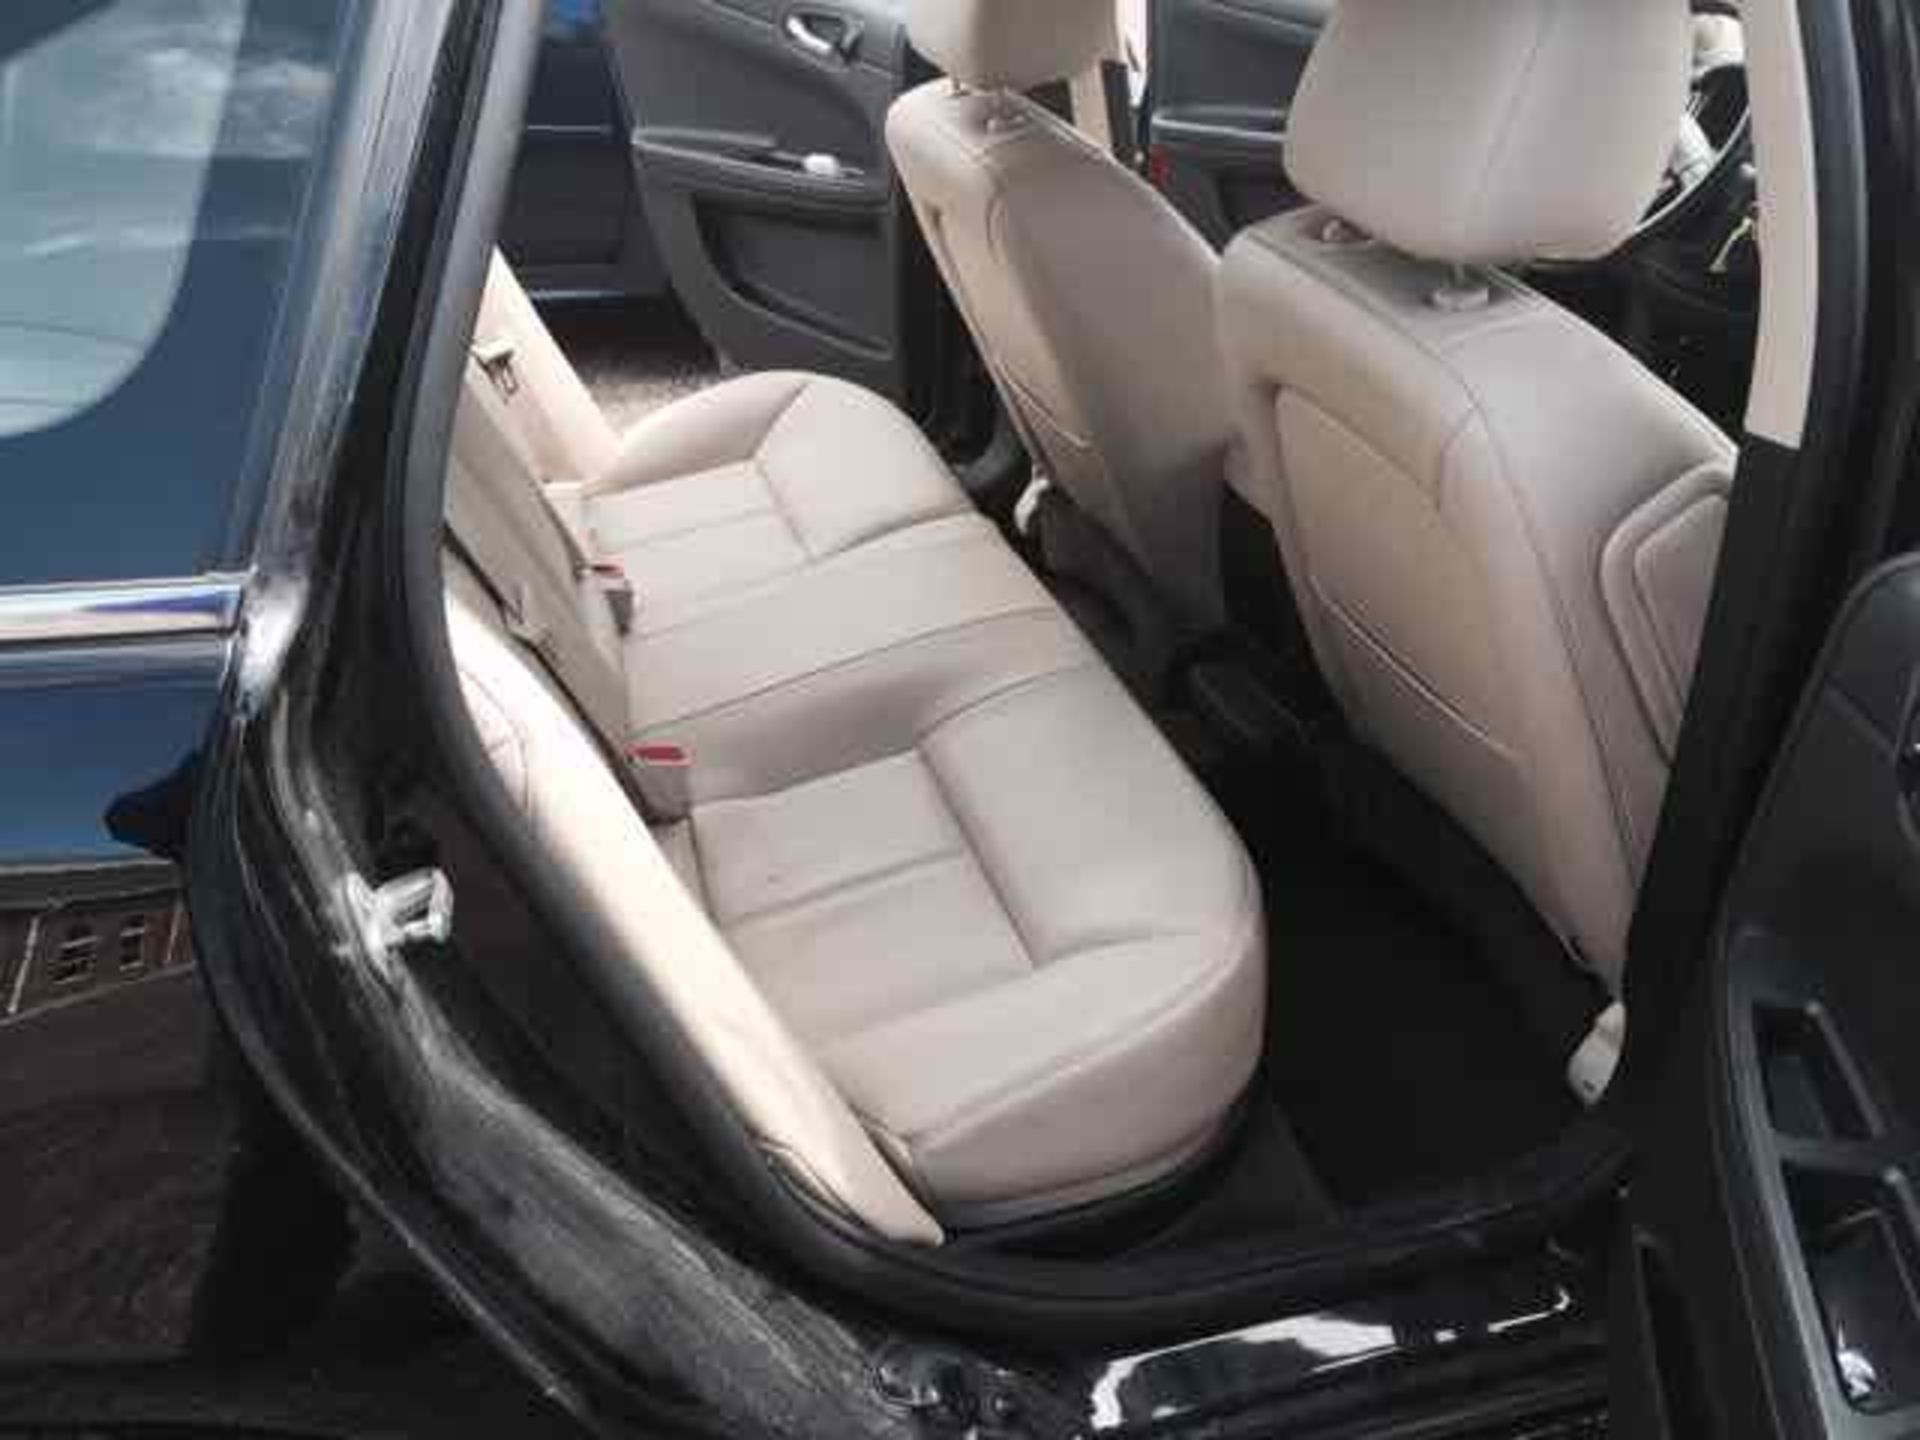 2012 Chevrolet Impala LTZ, VIN 2G1WC5E31C1308572, 4,710 lb. GVWR, 4-door, sunroof, black in color, - Image 11 of 12